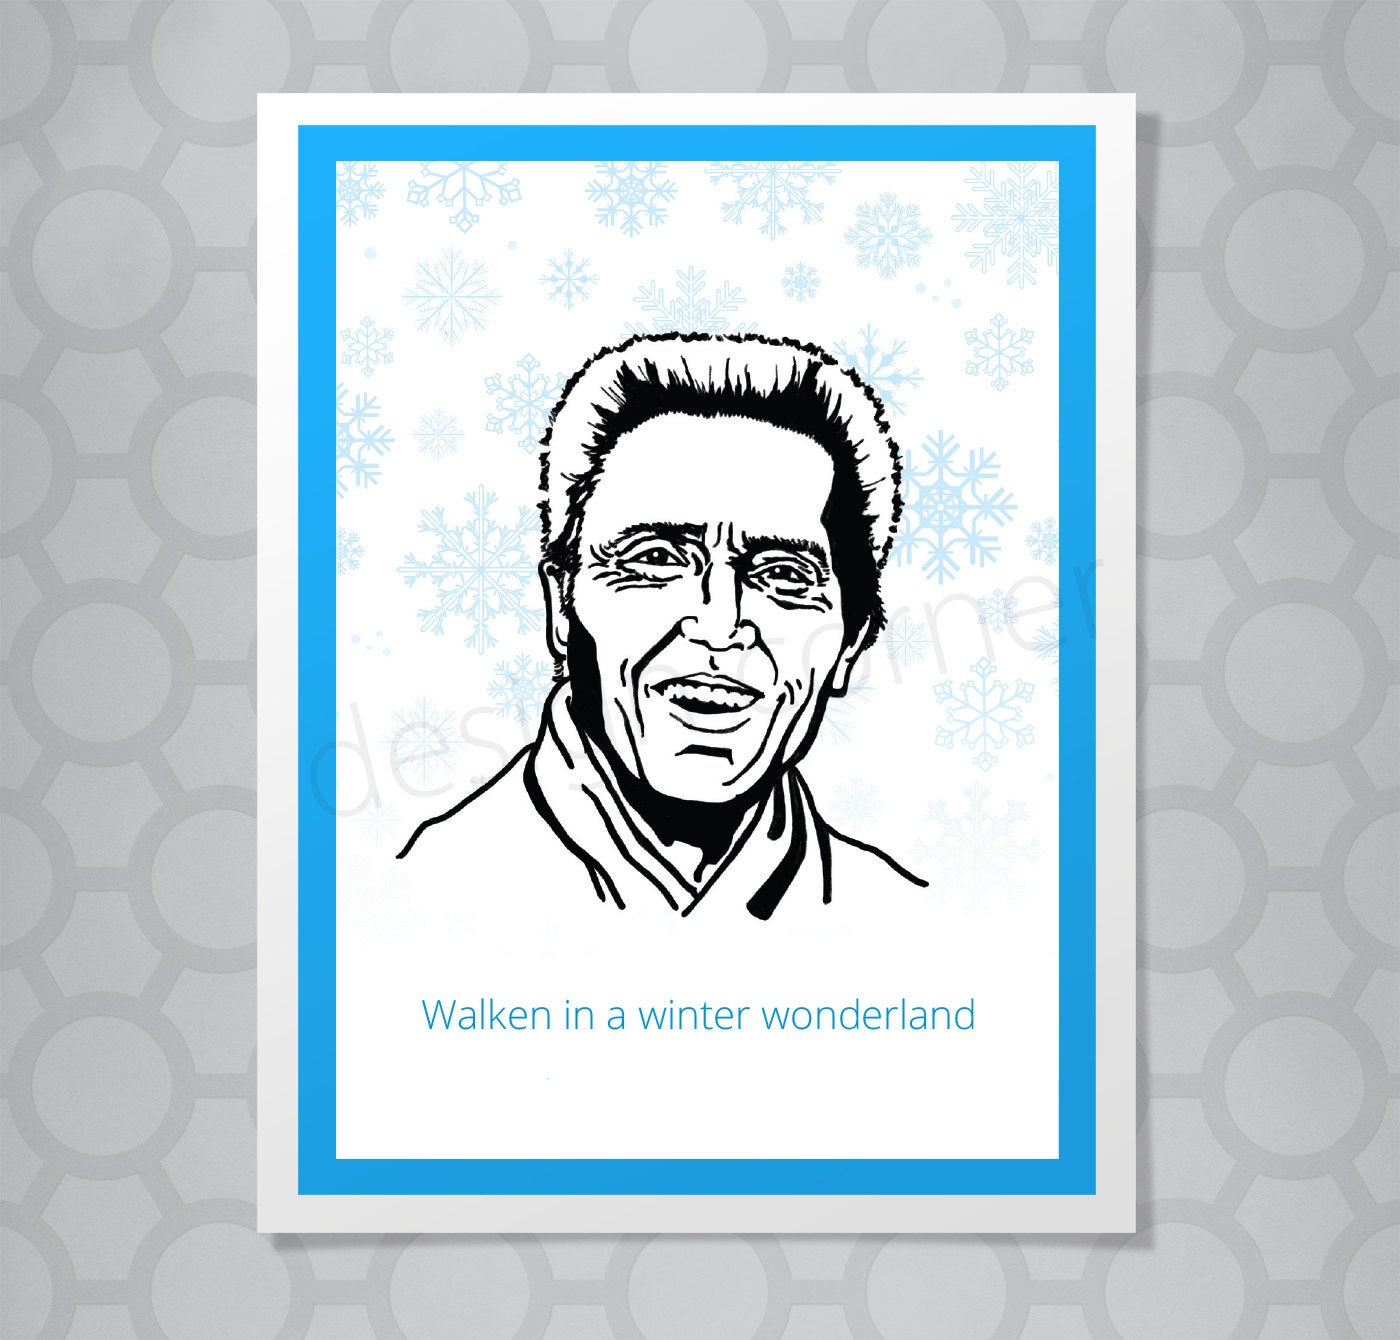 Illustration of Christopher Walken on a greeting card with caption "Walken in a winter wonderland"